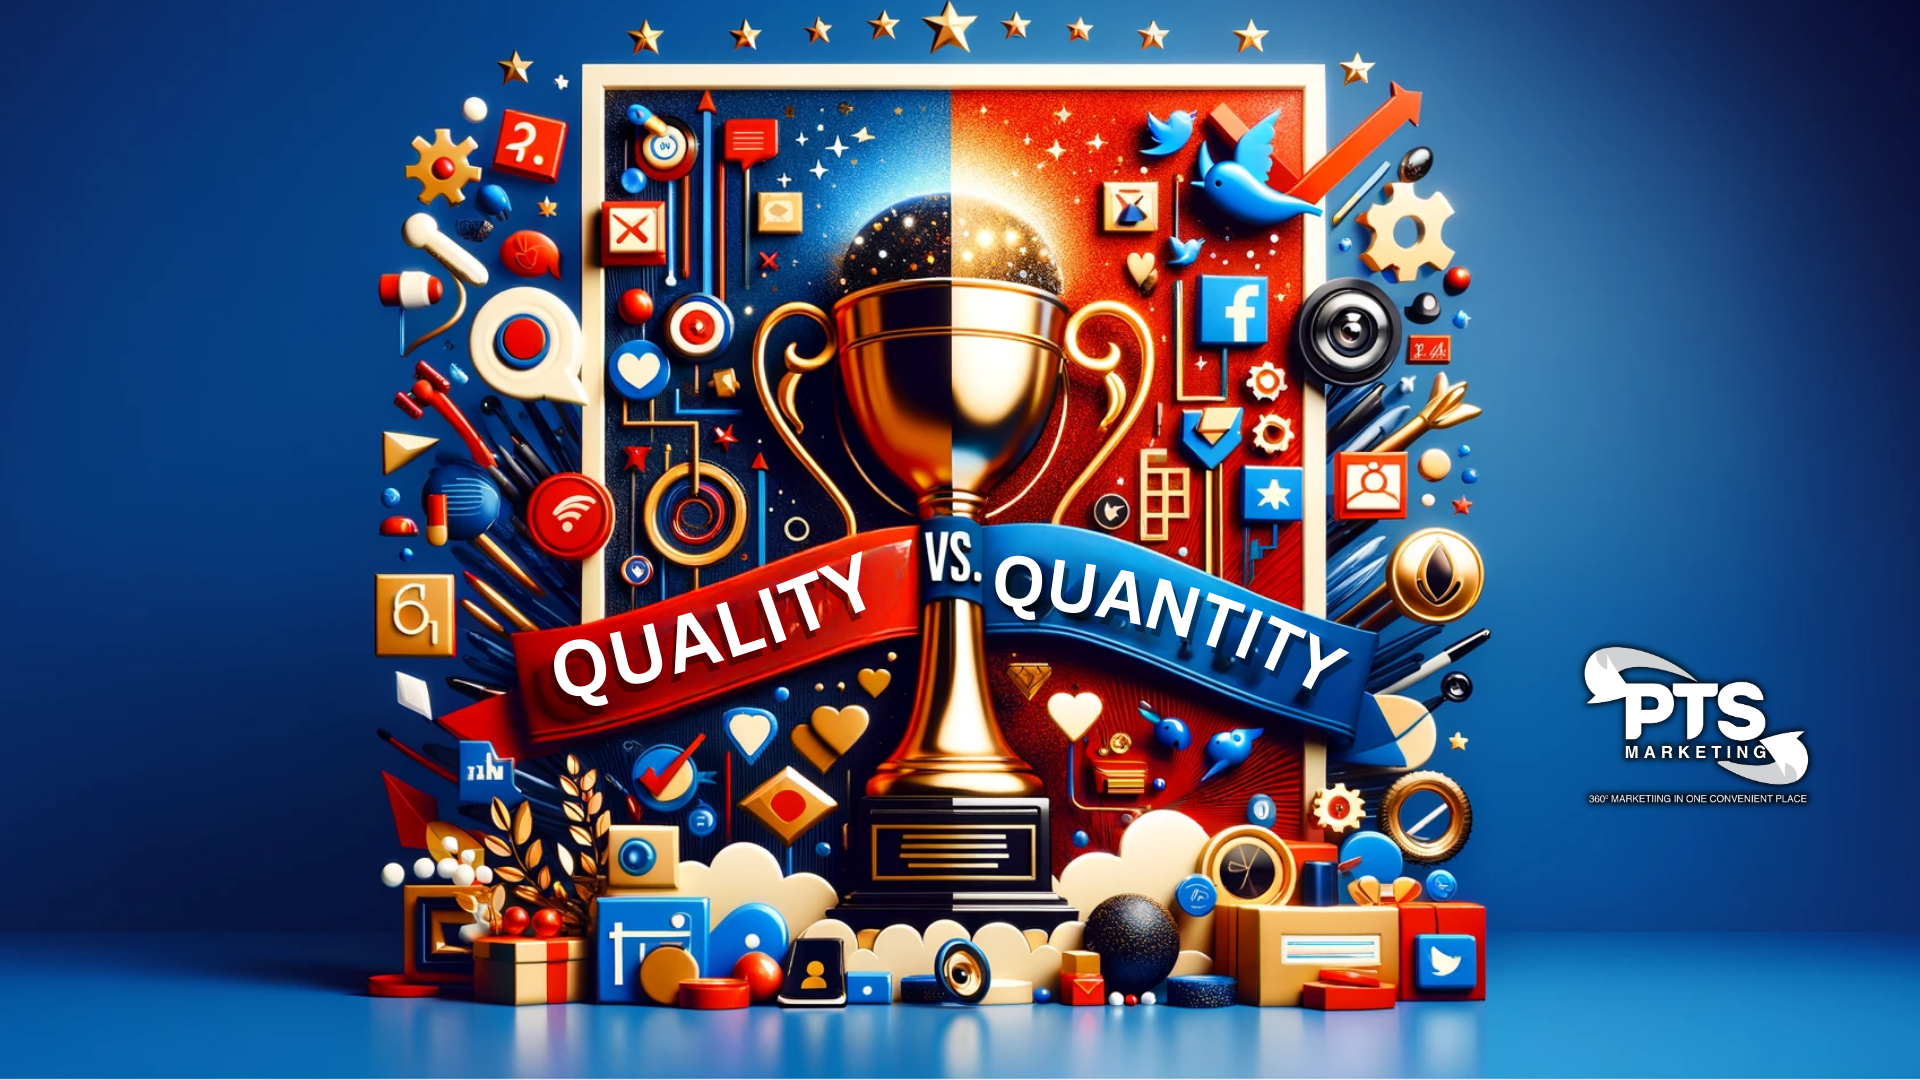 Posting on Social Media: Quality vs Quantity